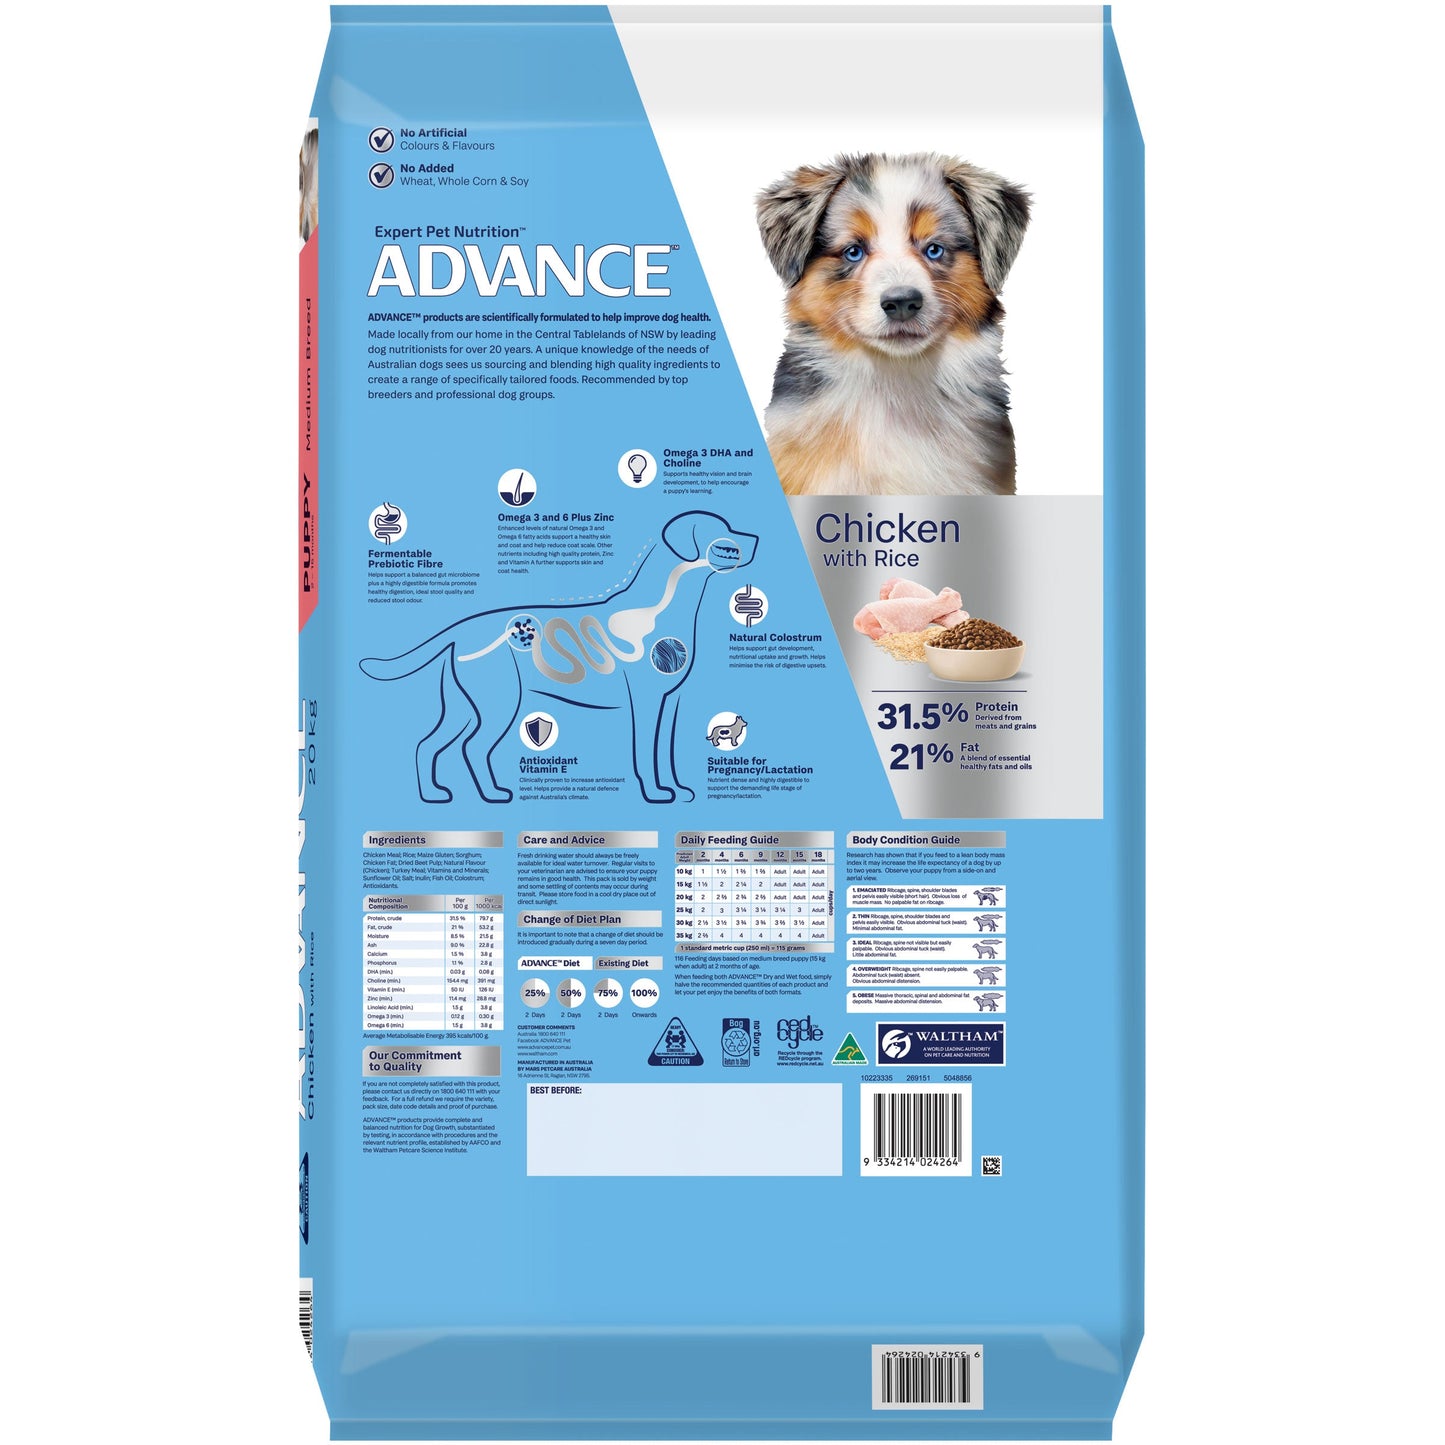 Advance Medium Breed Puppy Dry Dog Food